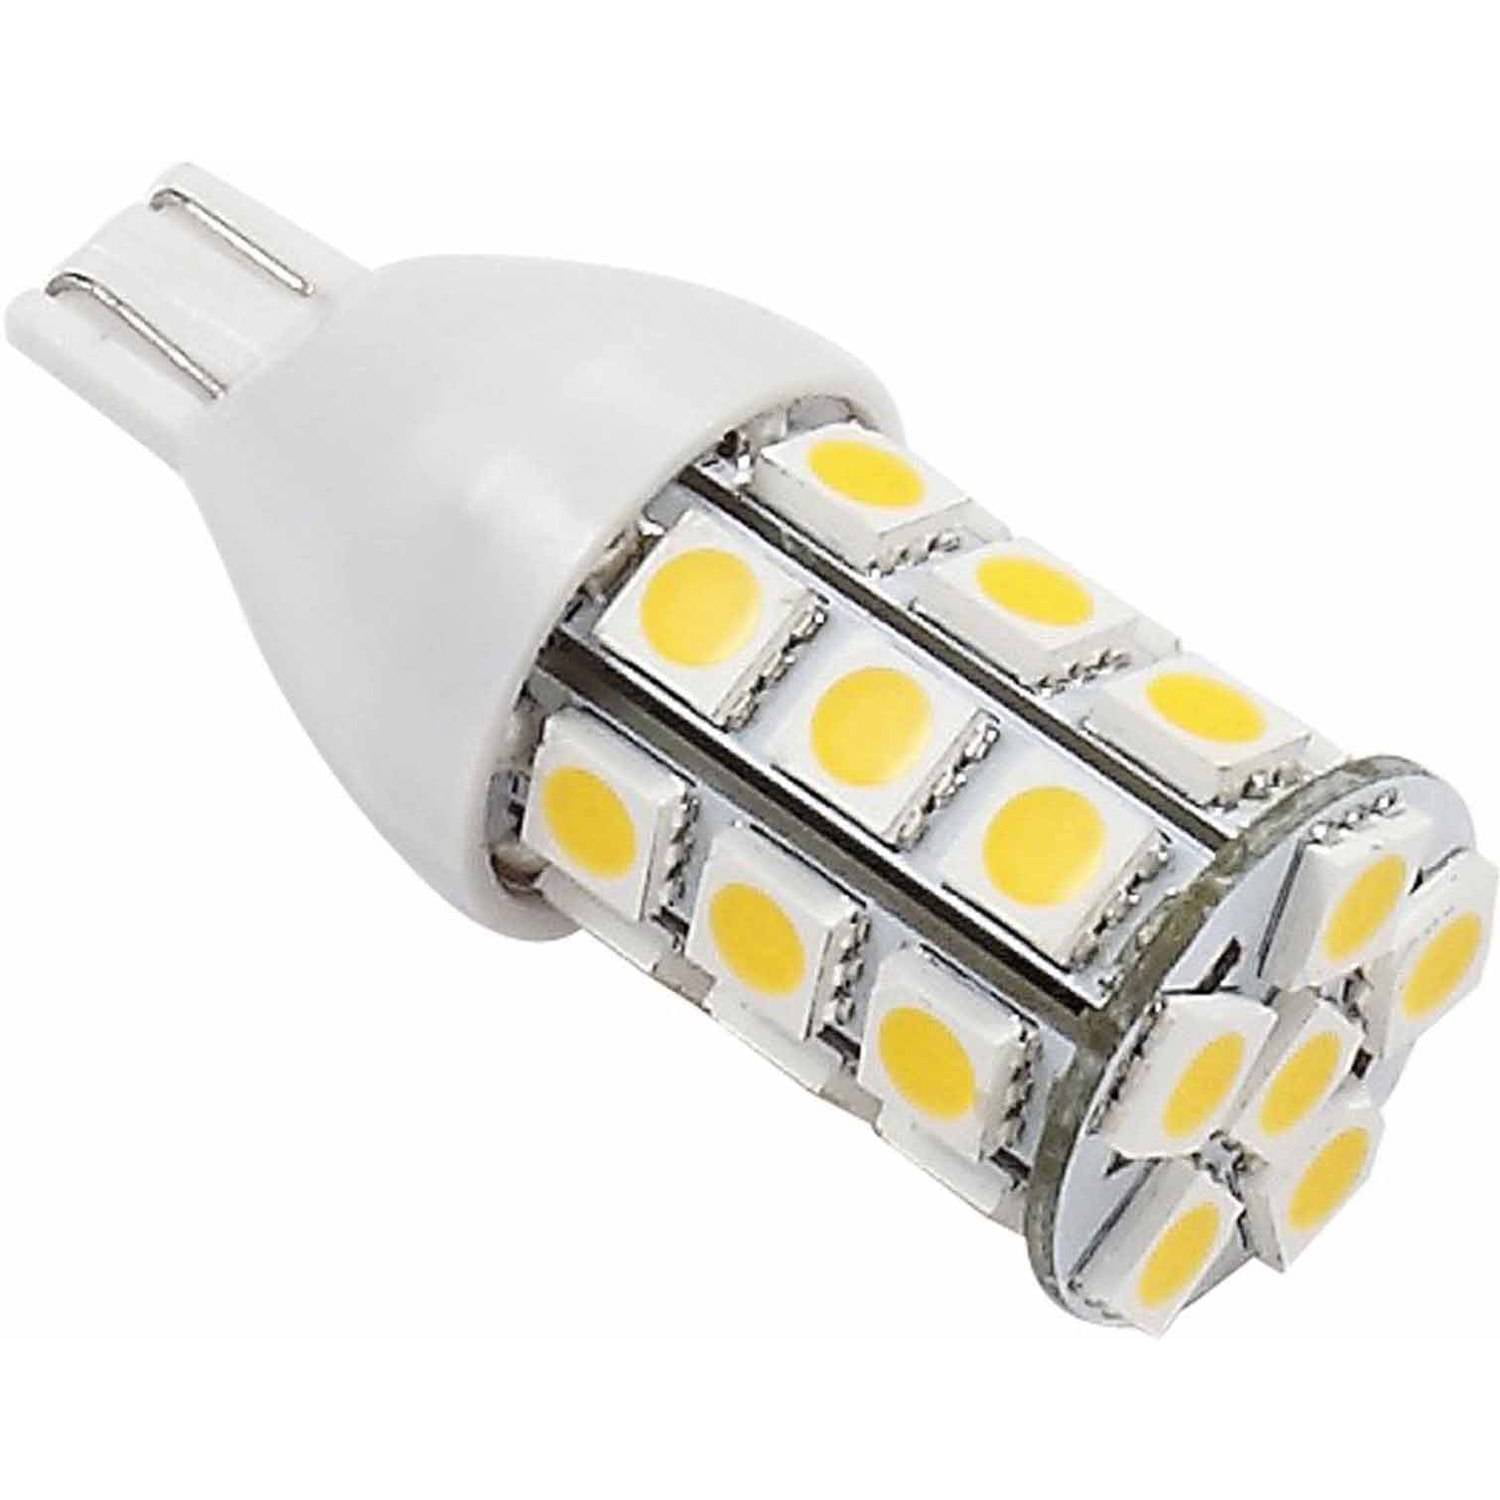 total 6 bulbs 1 6 pk 921 Base LED Replacement Bulb 250 LUM 10-24v Warm White 25011V 